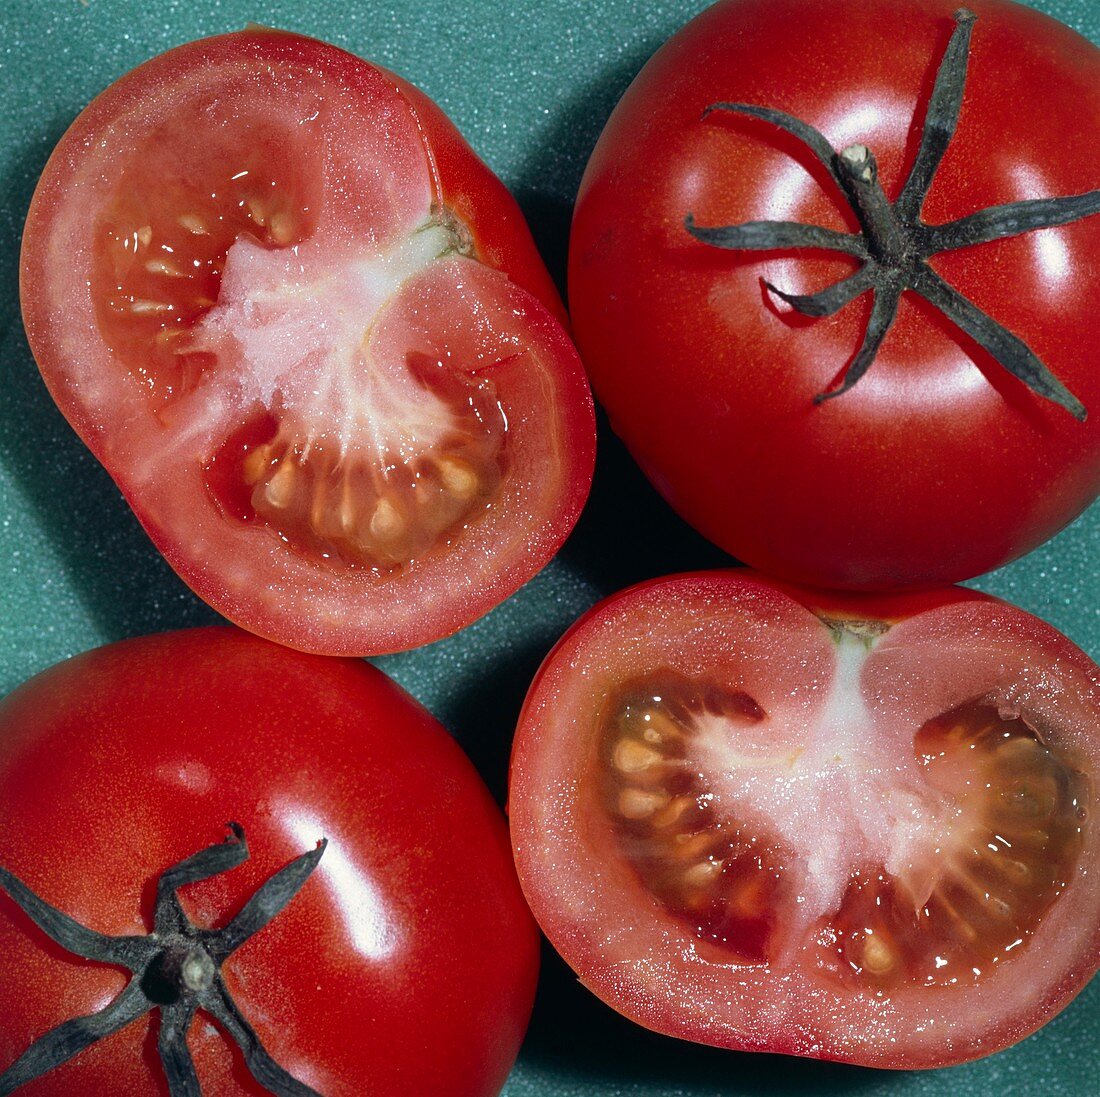 Tomatoes cut open